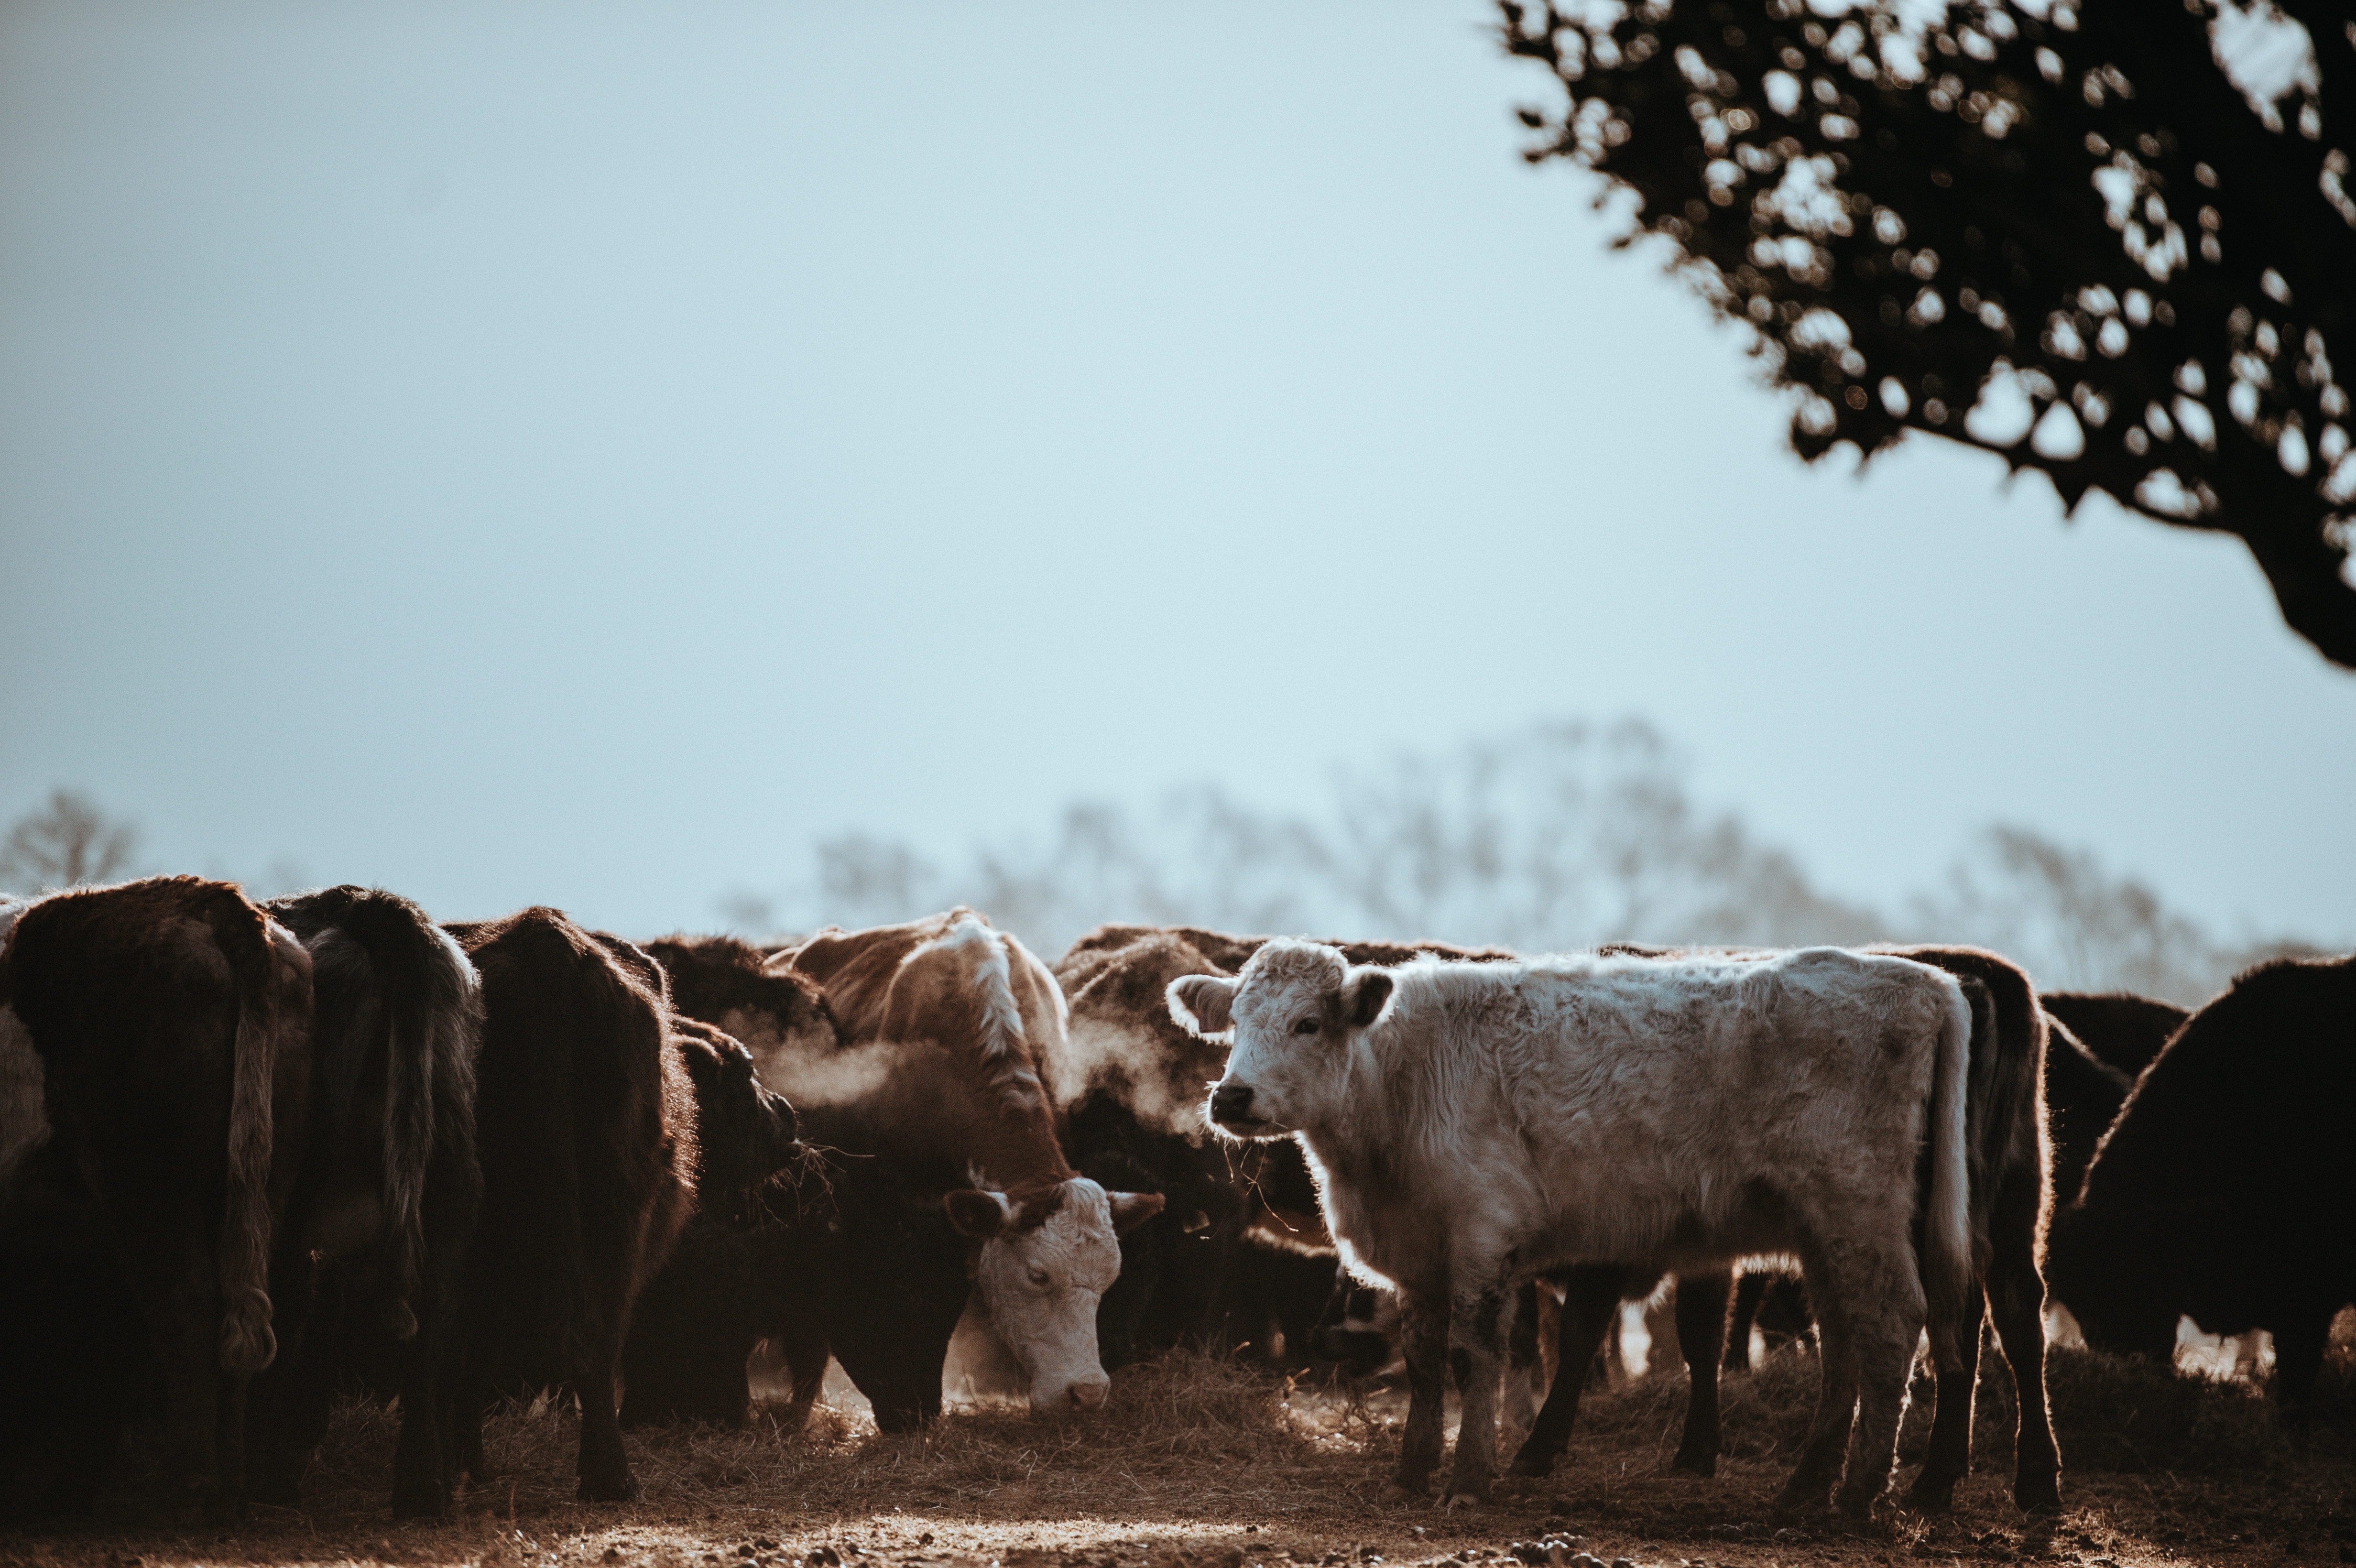 Grazing Cattle. Photo by Annie Sprat, via Unsplash (unsplash.com/photos/Q-VqoBCBurk)